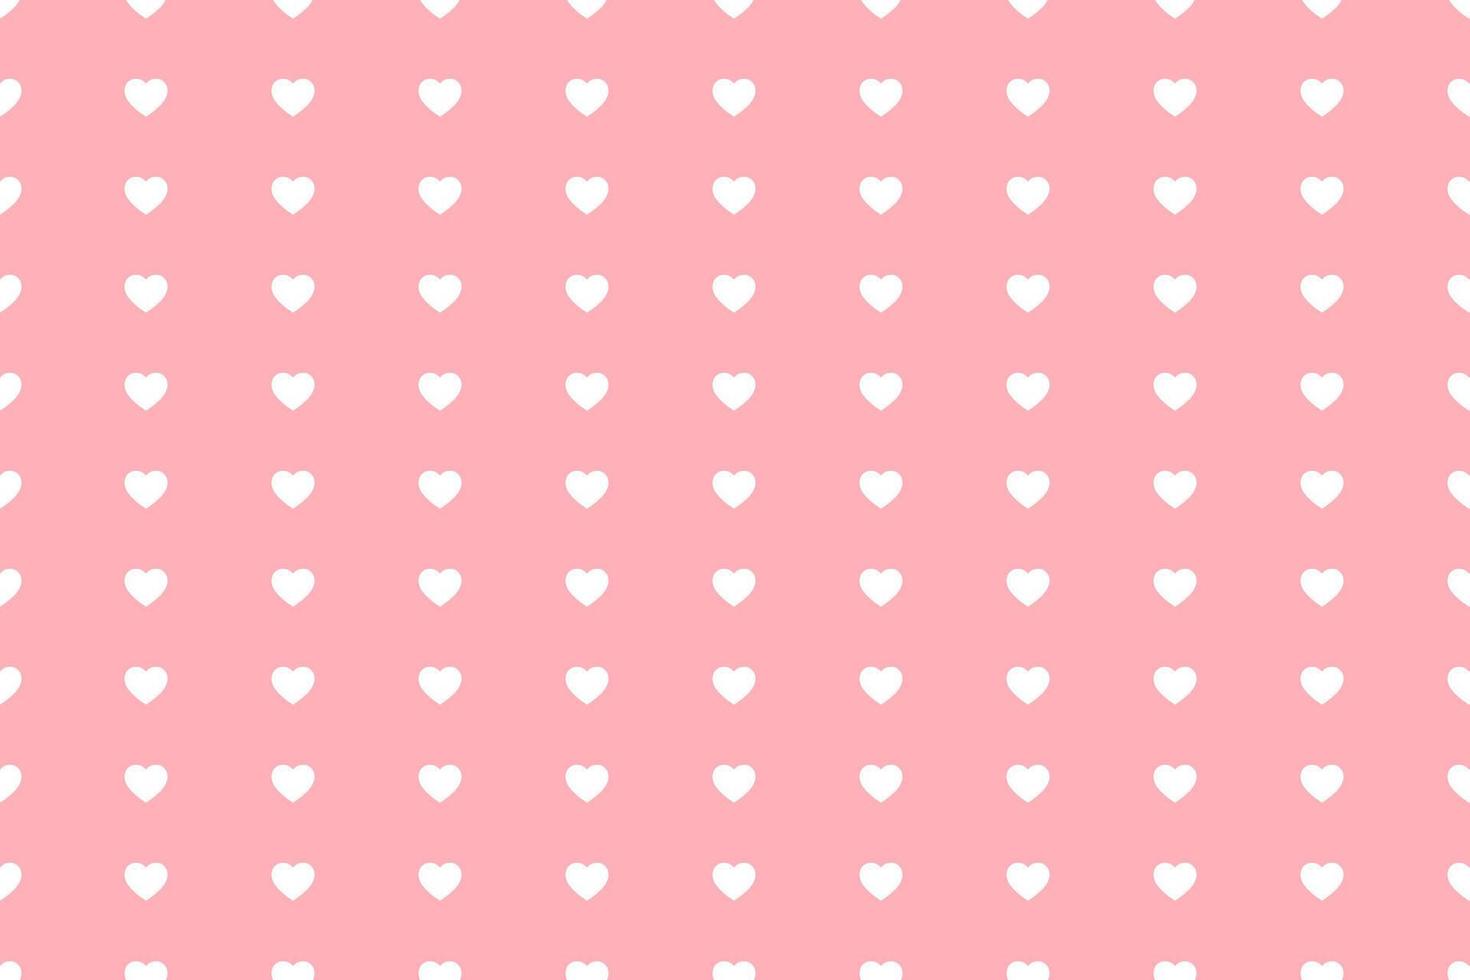 Vektor-Illustration Herzmuster Liebhaber rosa Hintergrund, gestreifte Herzform Muster abstrakt vektor